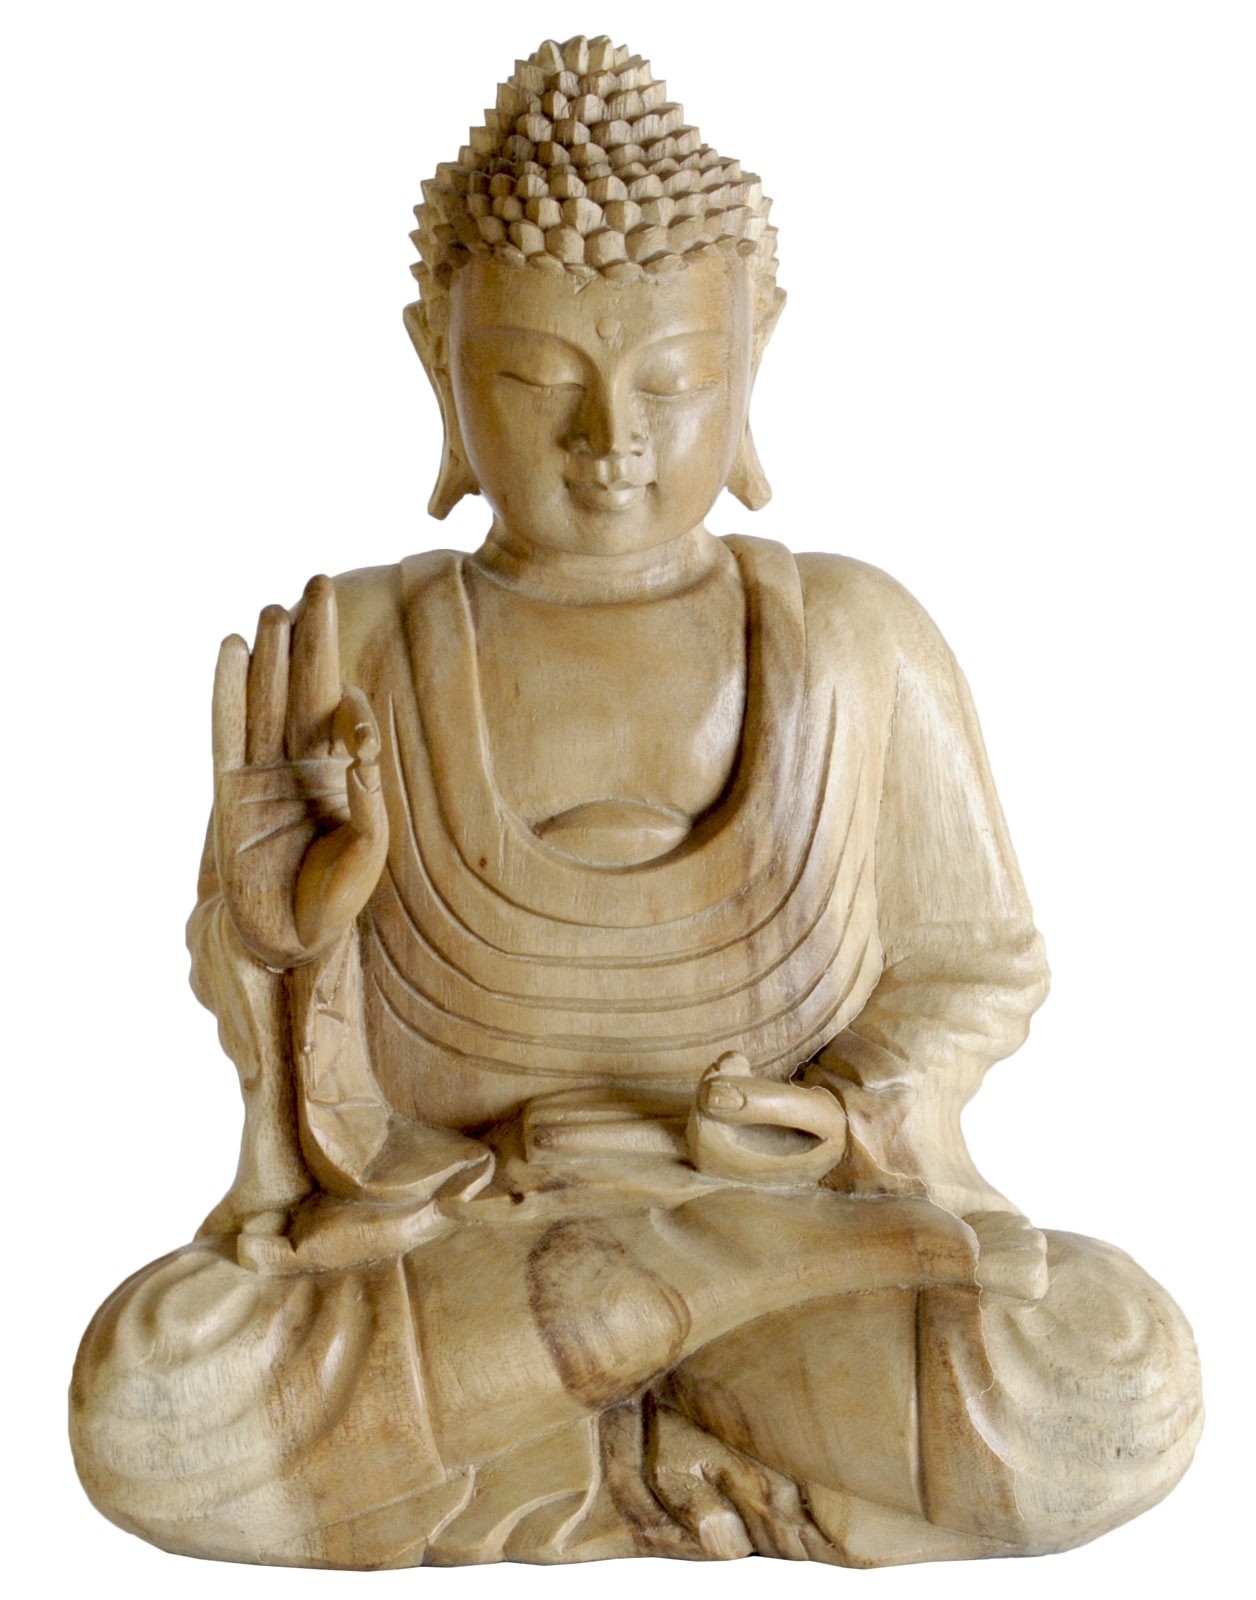 Wooden Meditating Buddha Statue 40cm - Natural Finish